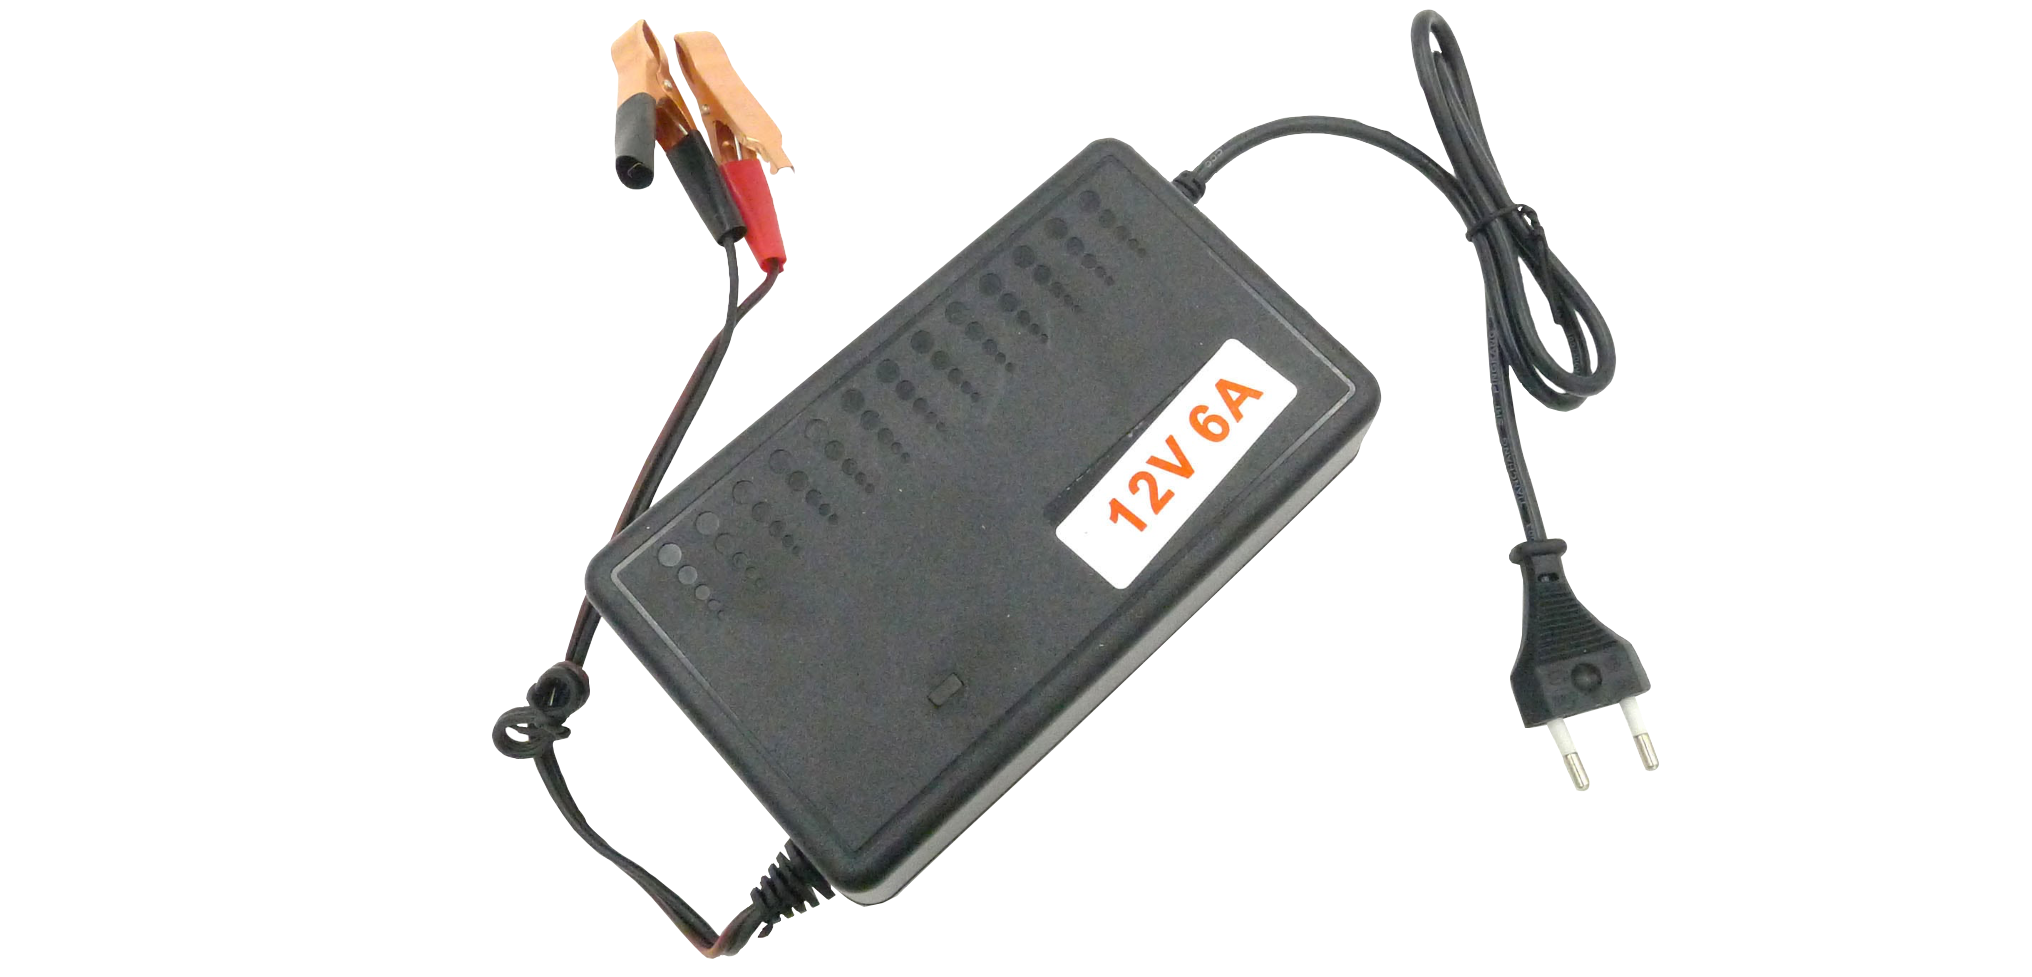 12V battery charger